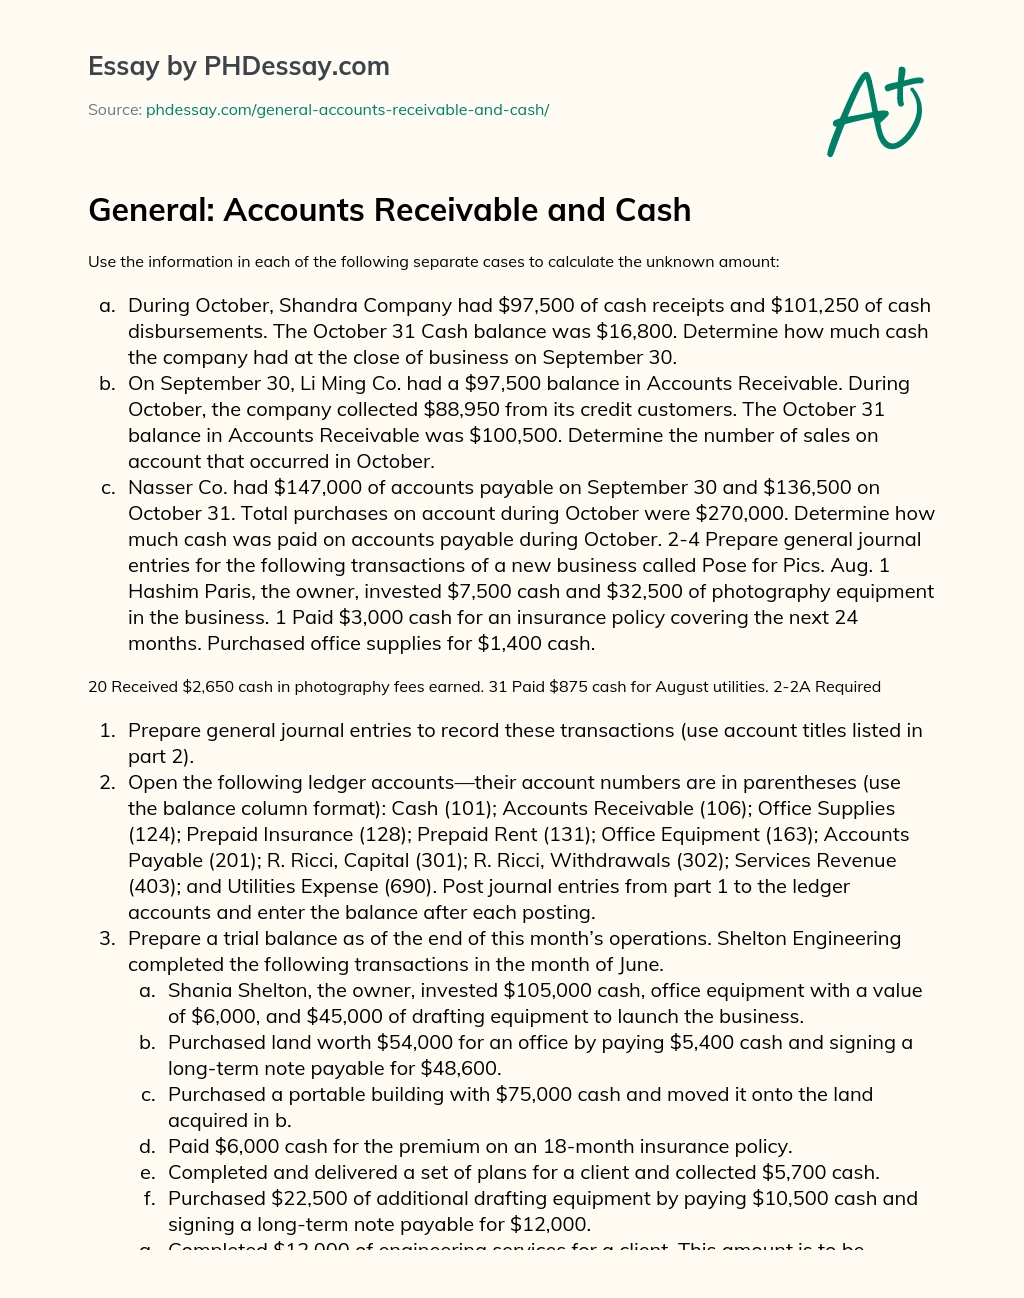 General: Accounts Receivable and Cash essay